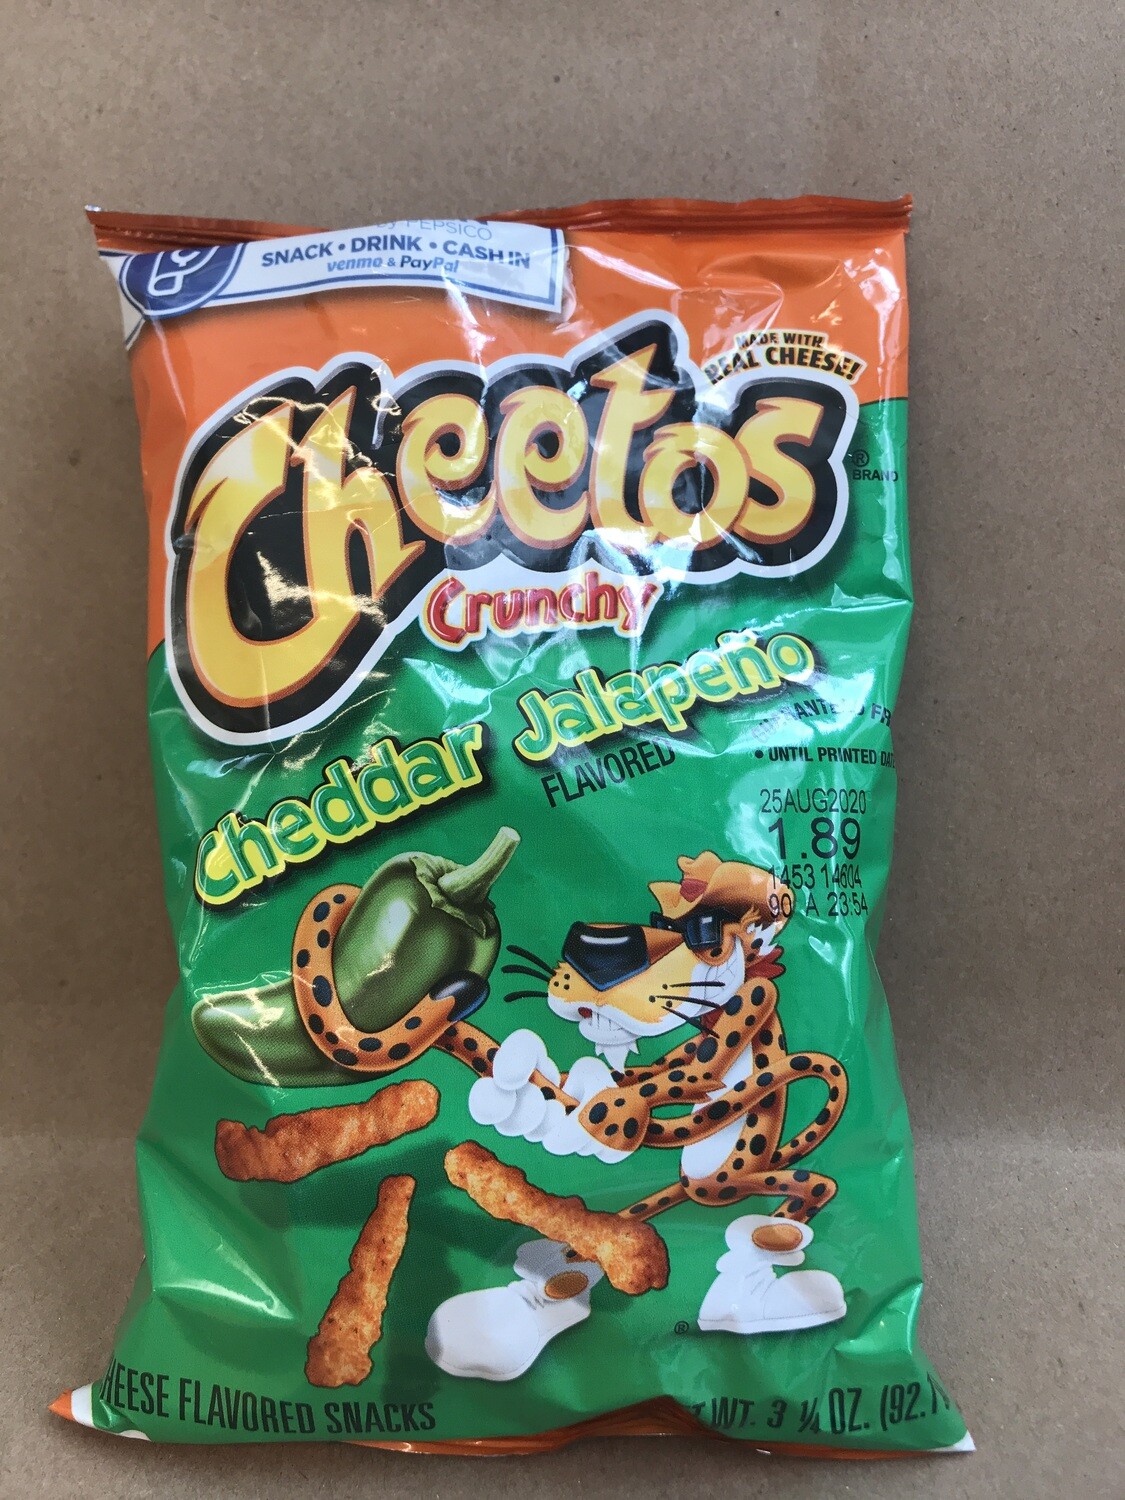 Chips / Small Bag / Cheetos Crunchy Cheddar Jalapeno, 3.5 oz